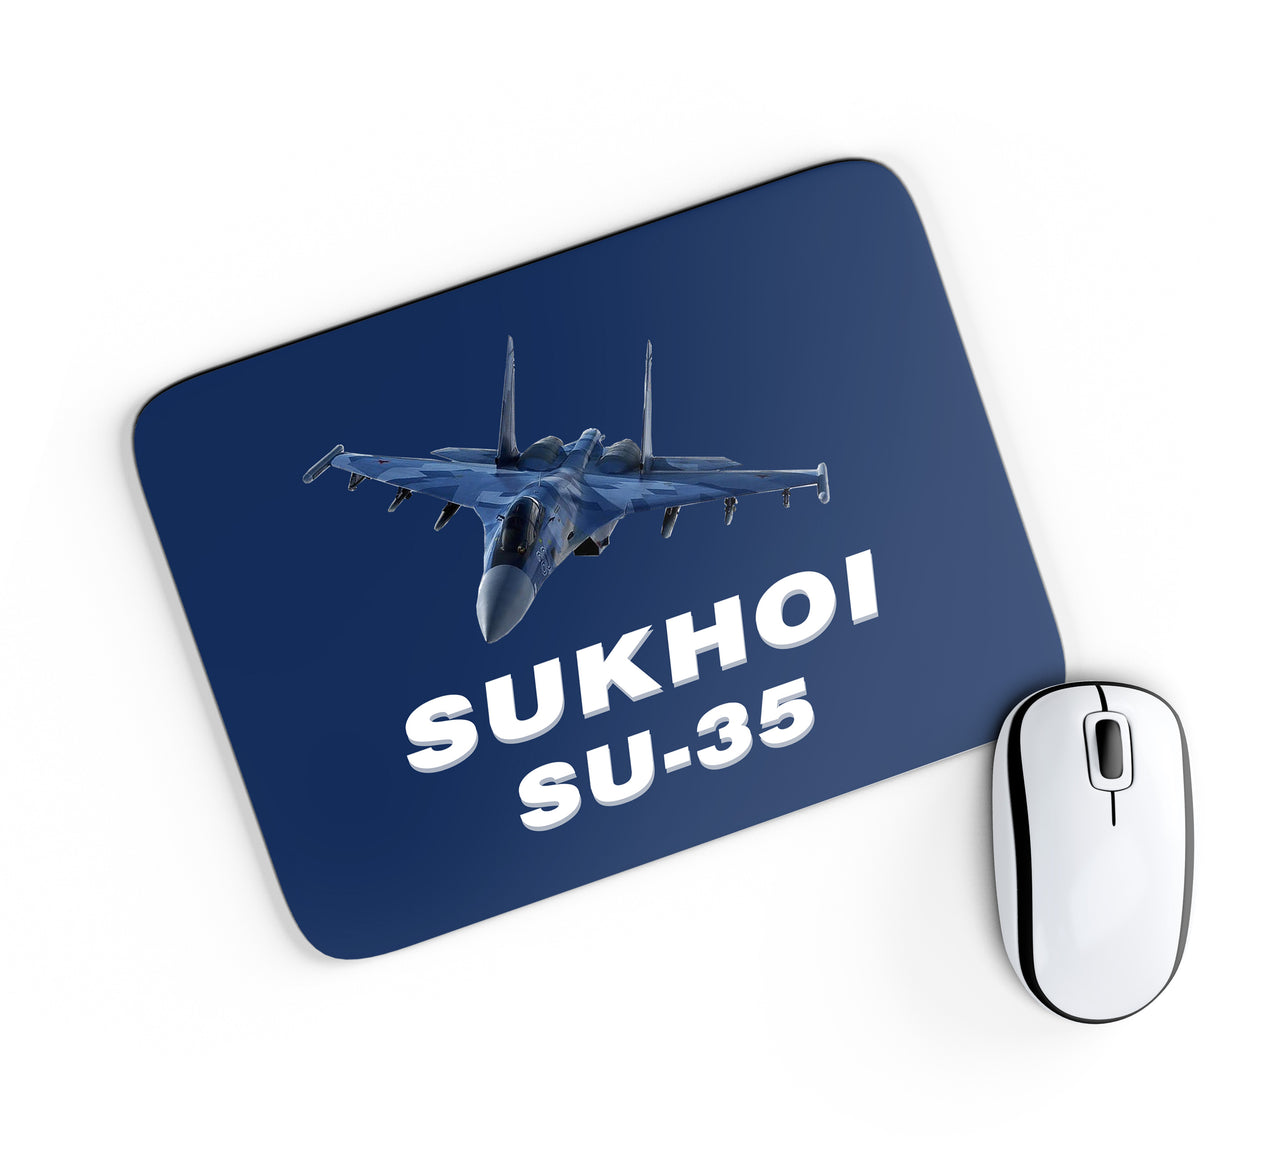 The Sukhoi SU-35 Designed Mouse Pads